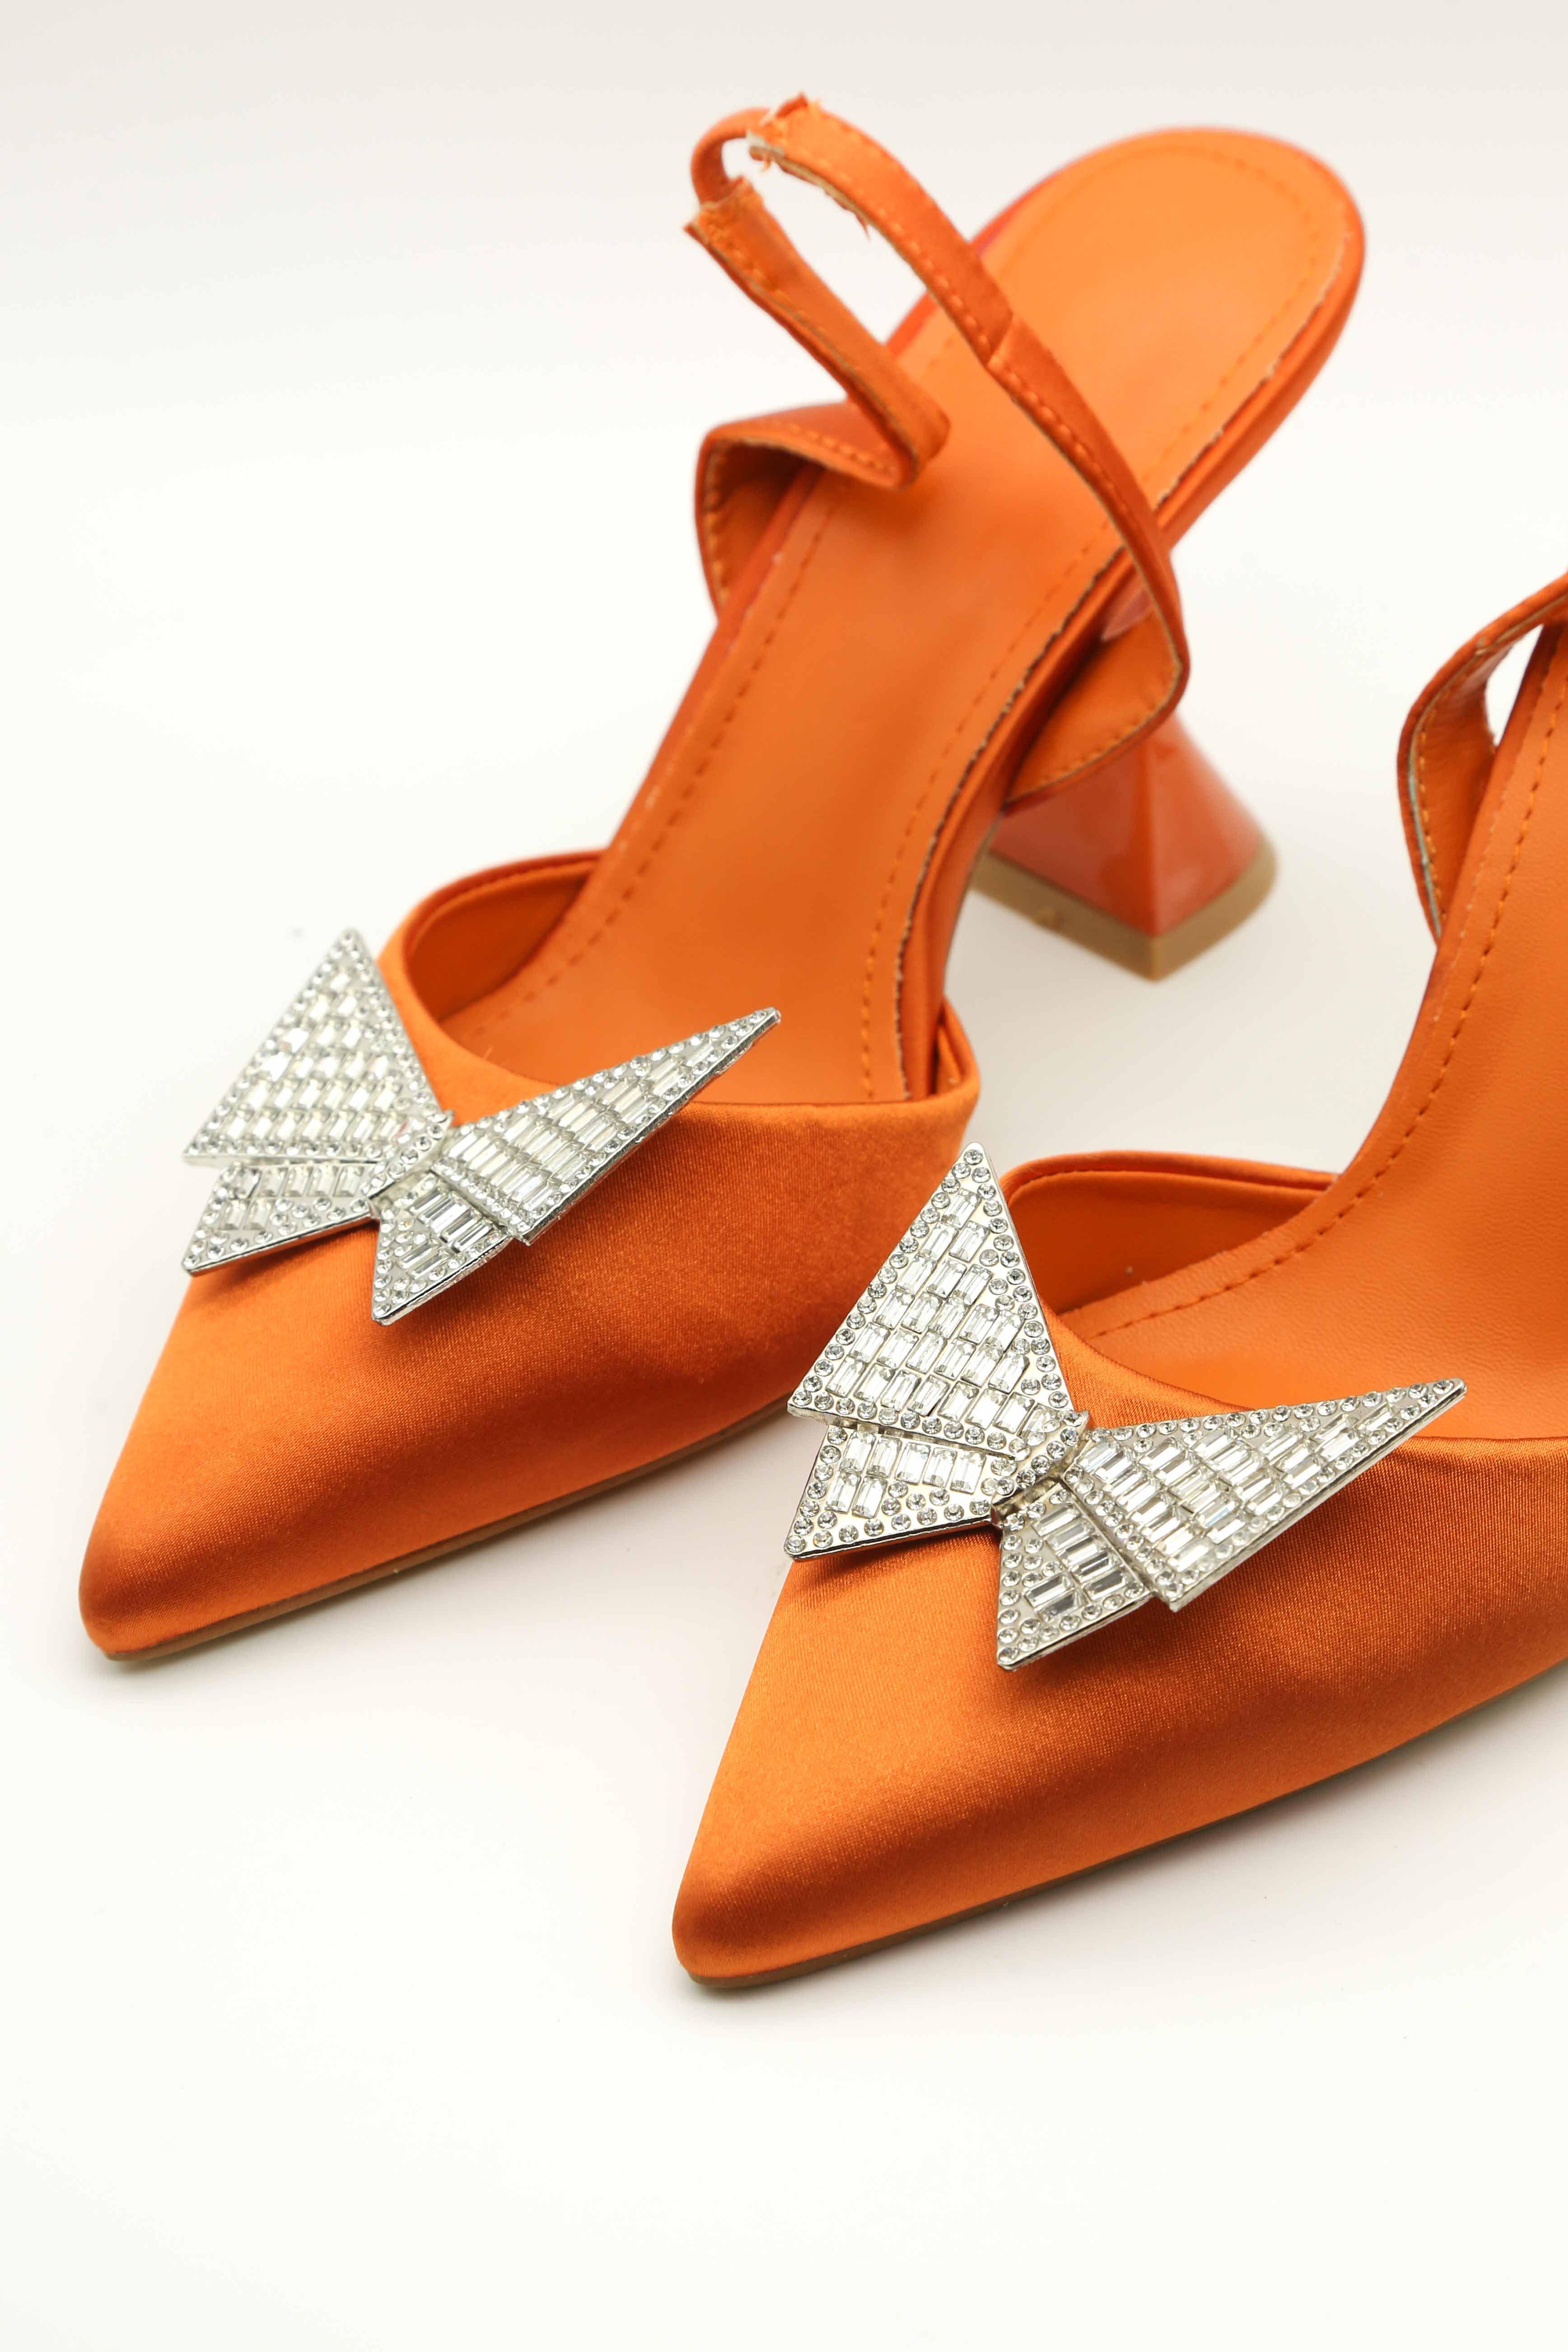 Amazon.com: Orange Kitten Heels: Clothing, Shoes & Jewelry